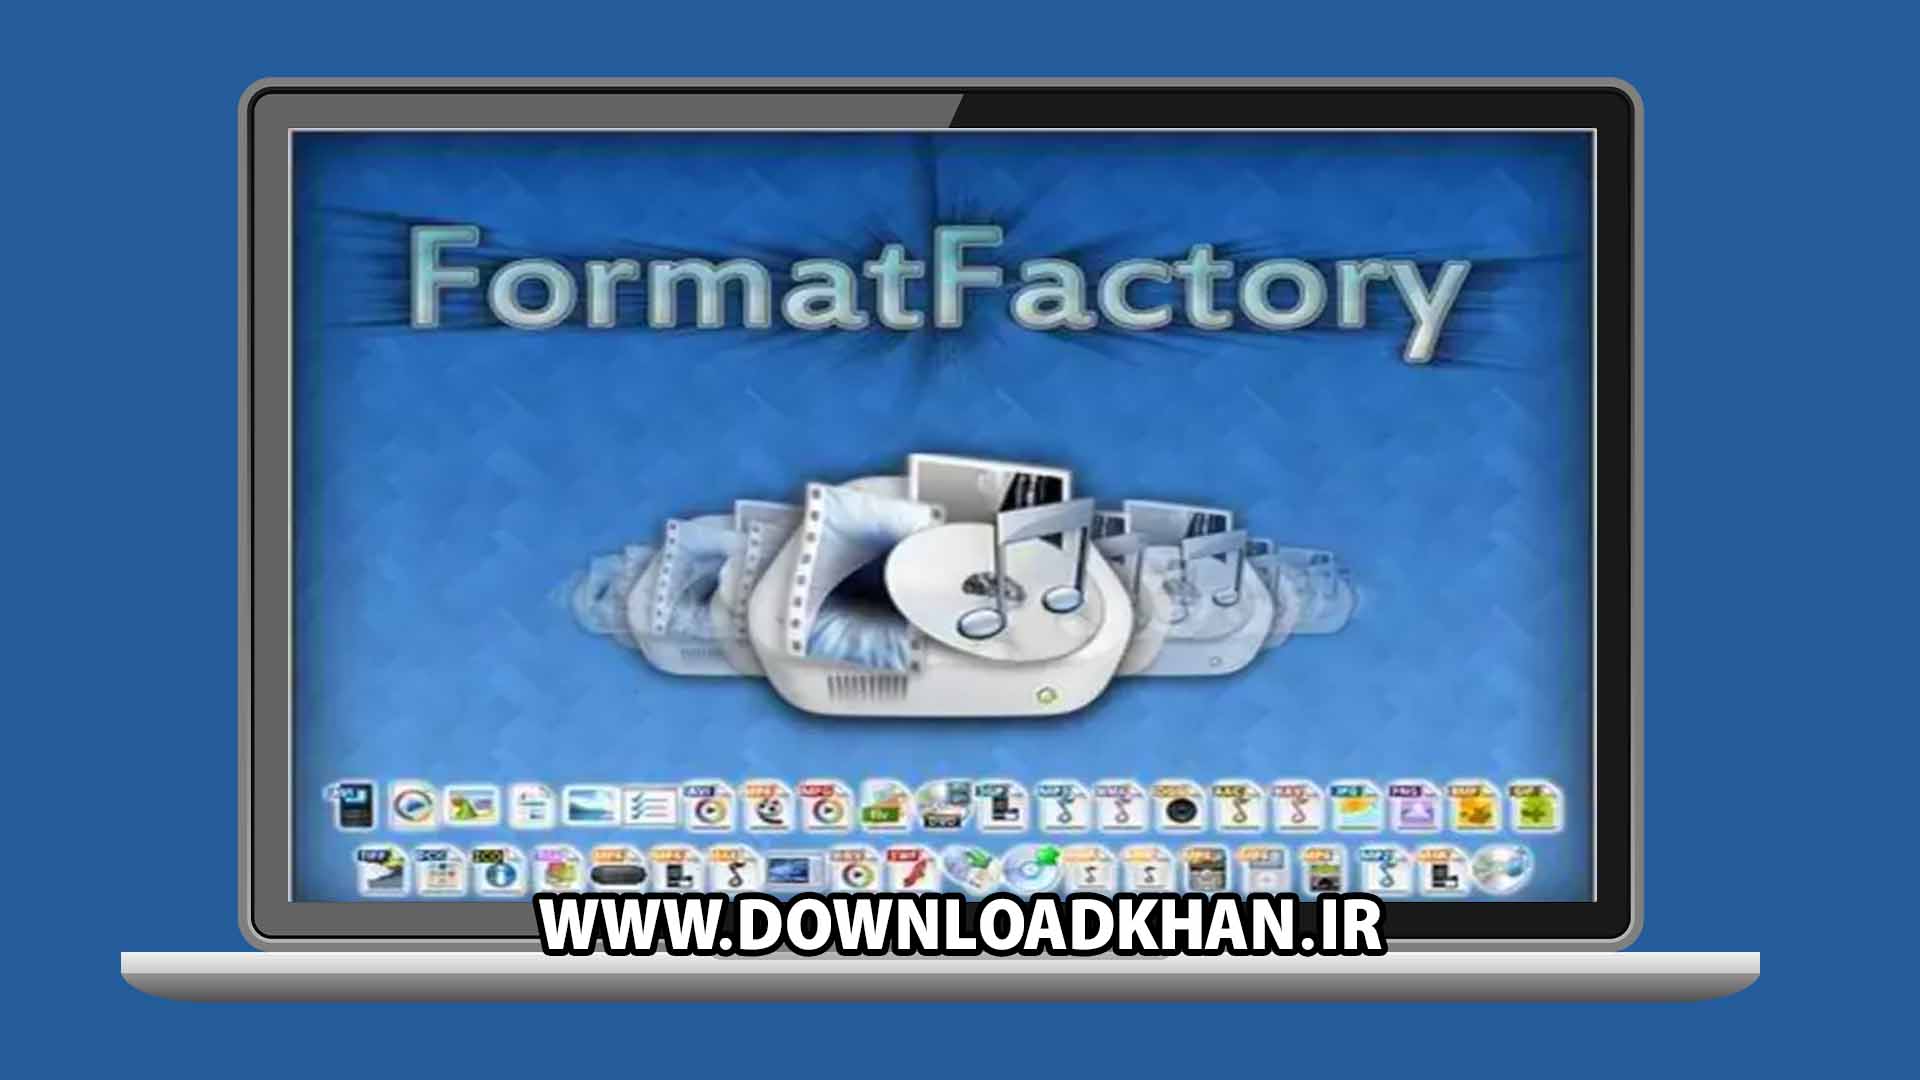 format factory